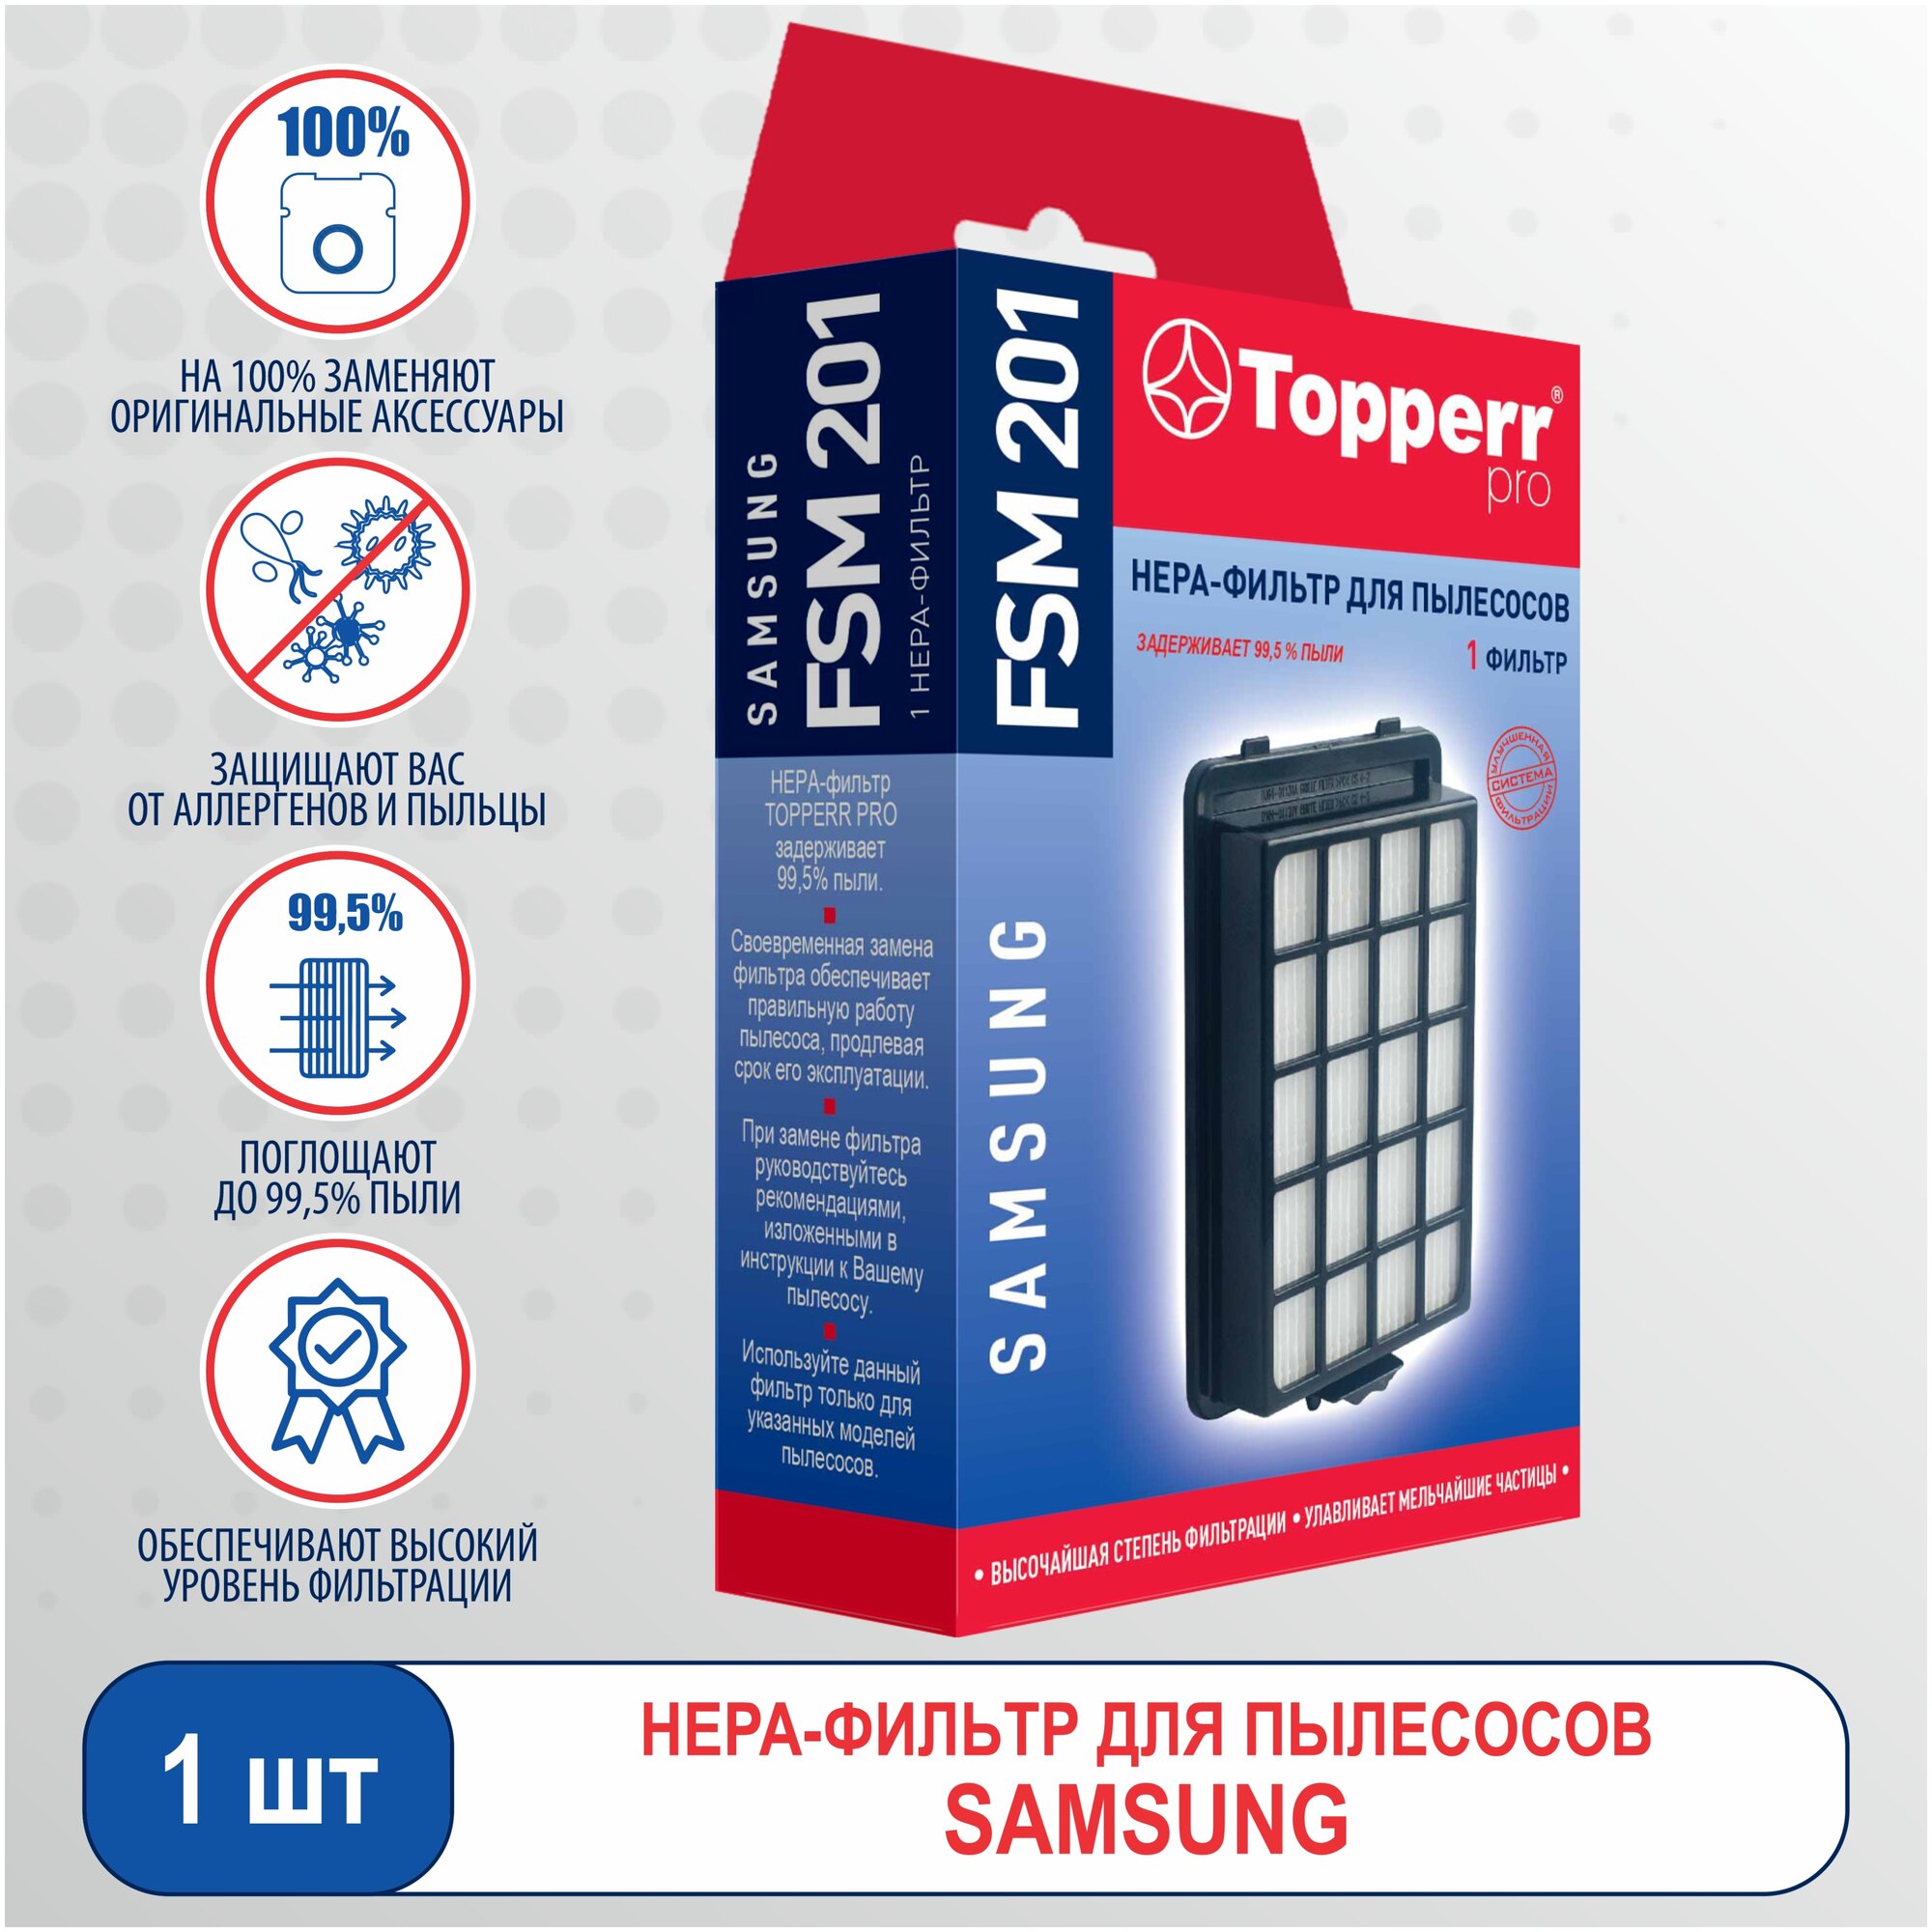 Topperr HEPA-фильтр FSM 201